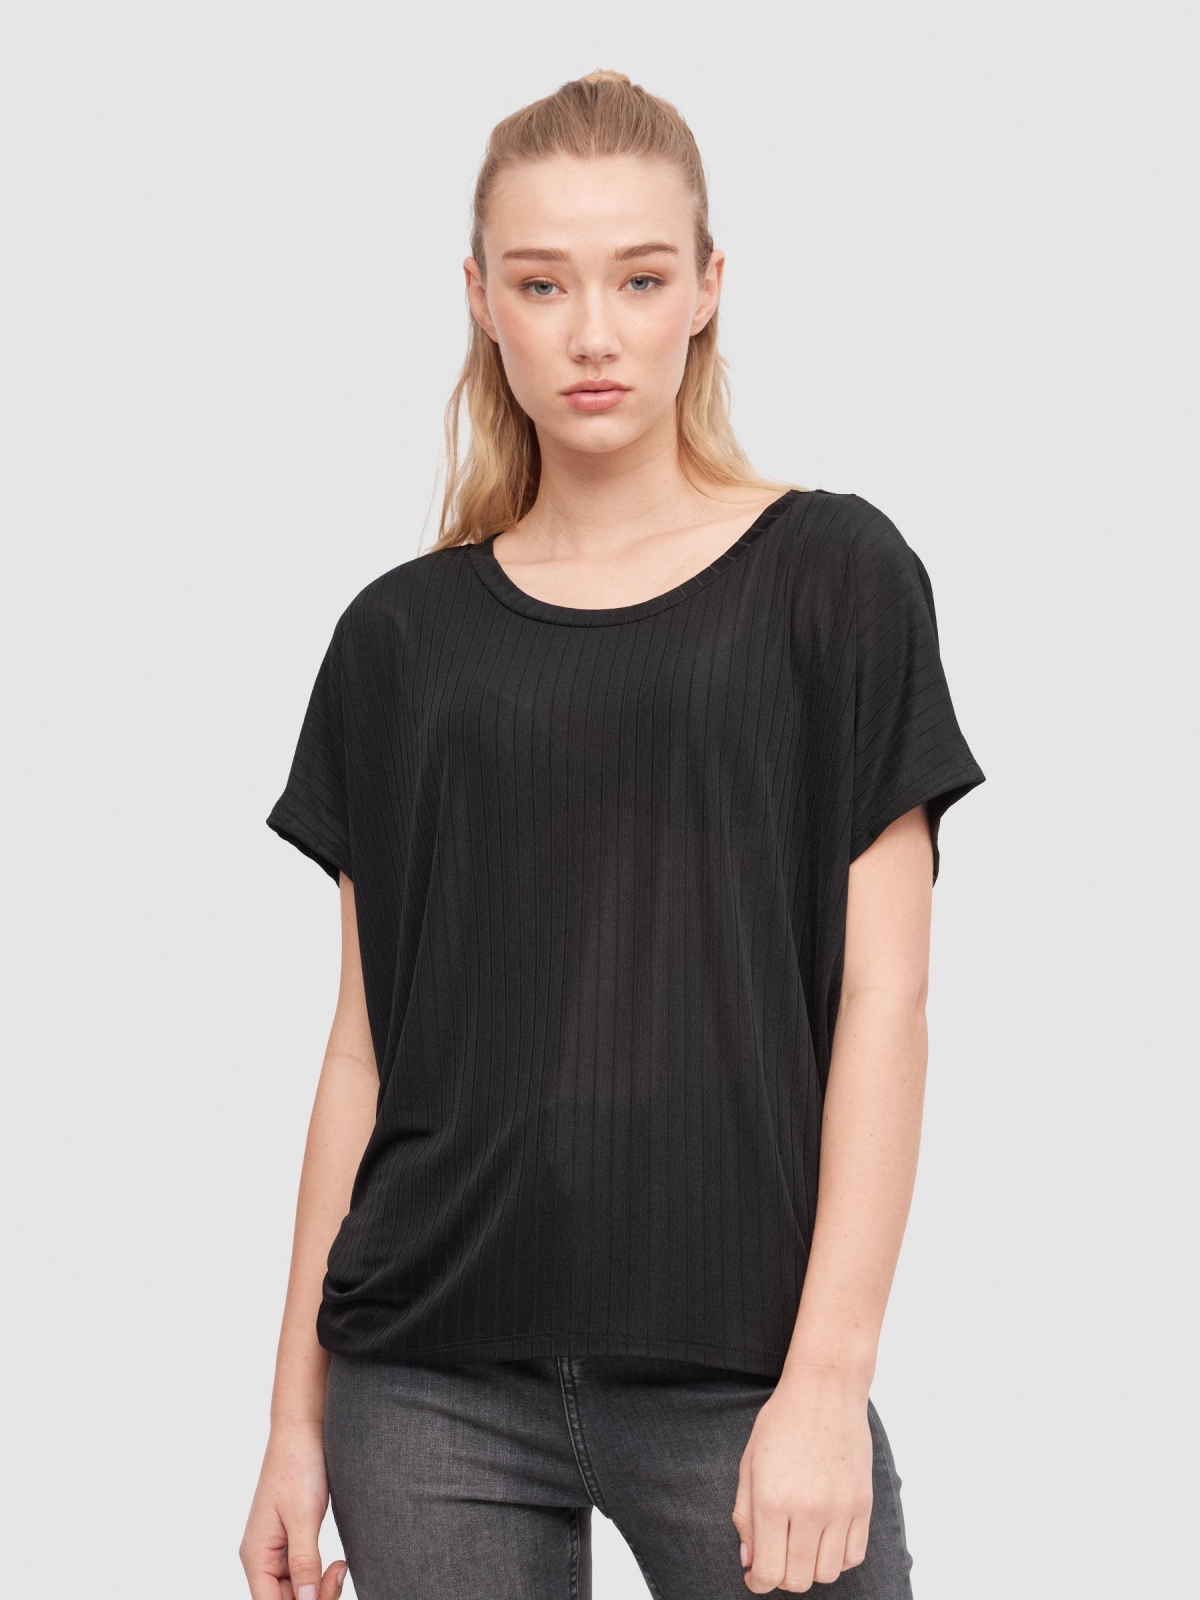 Rib asymmetrical hem T-shirt black middle front view